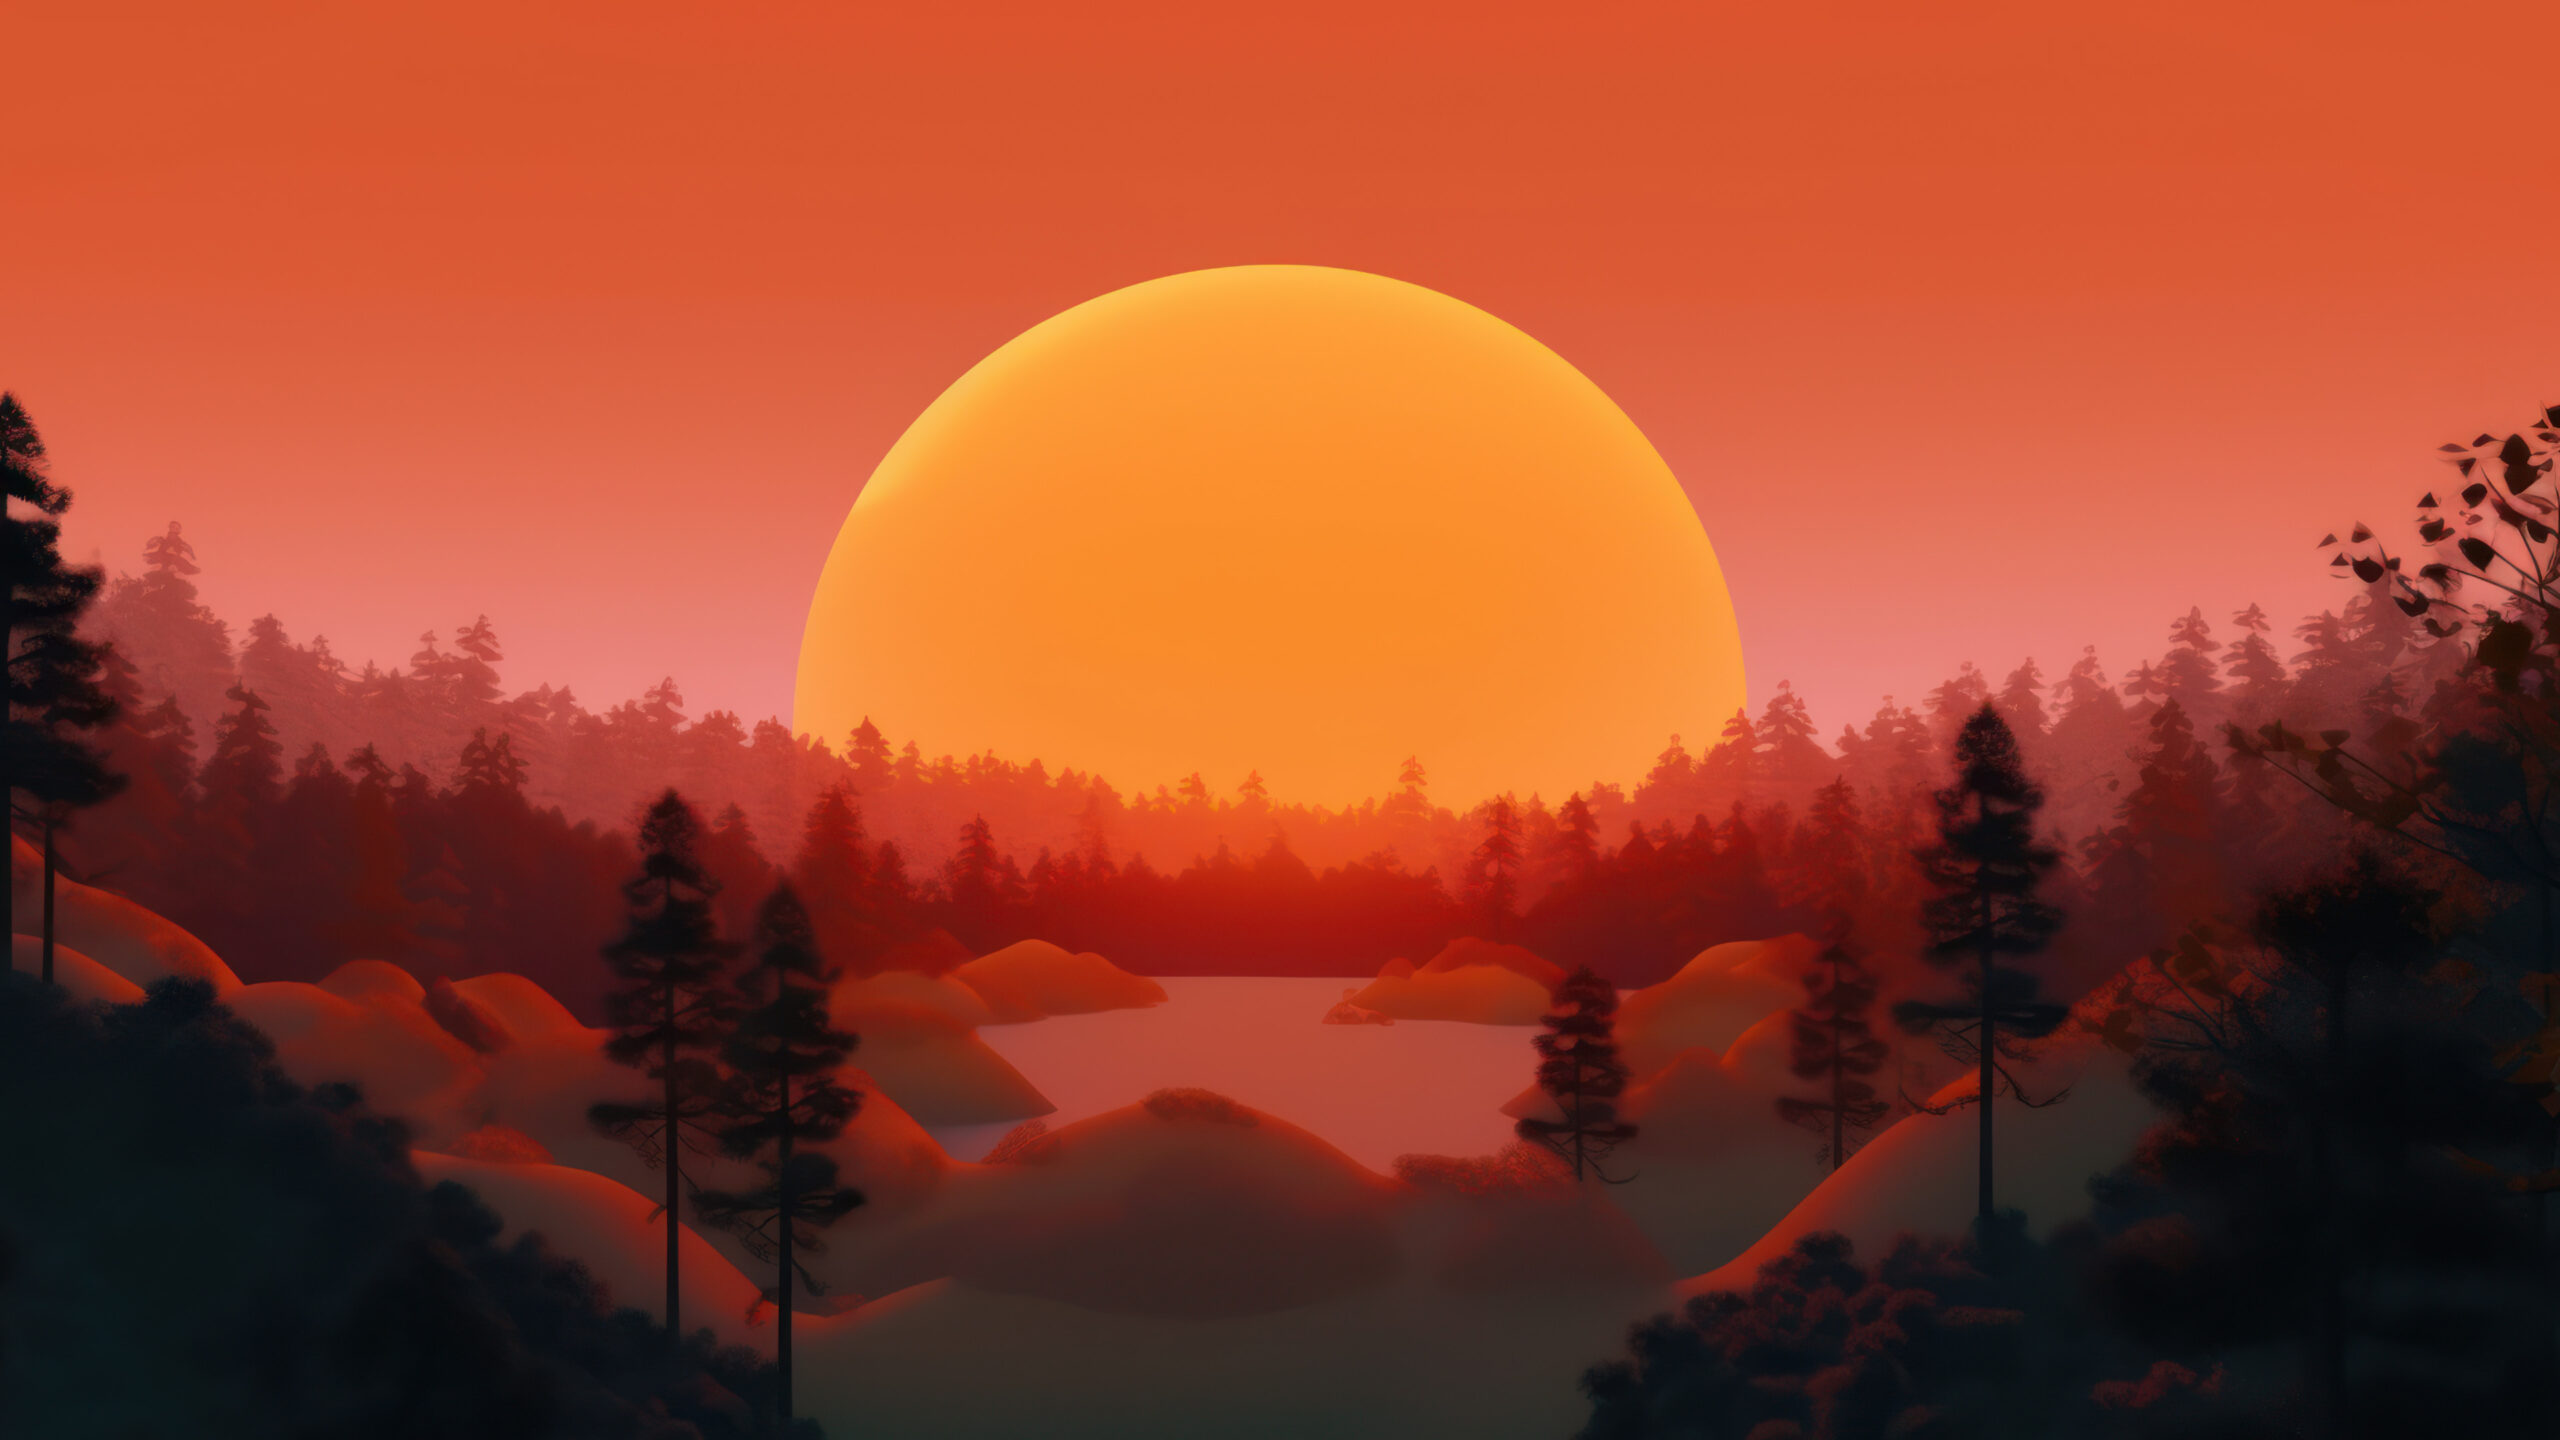 Sunset Scenery Minimal 4K Wallpapers, HD Wallpapers